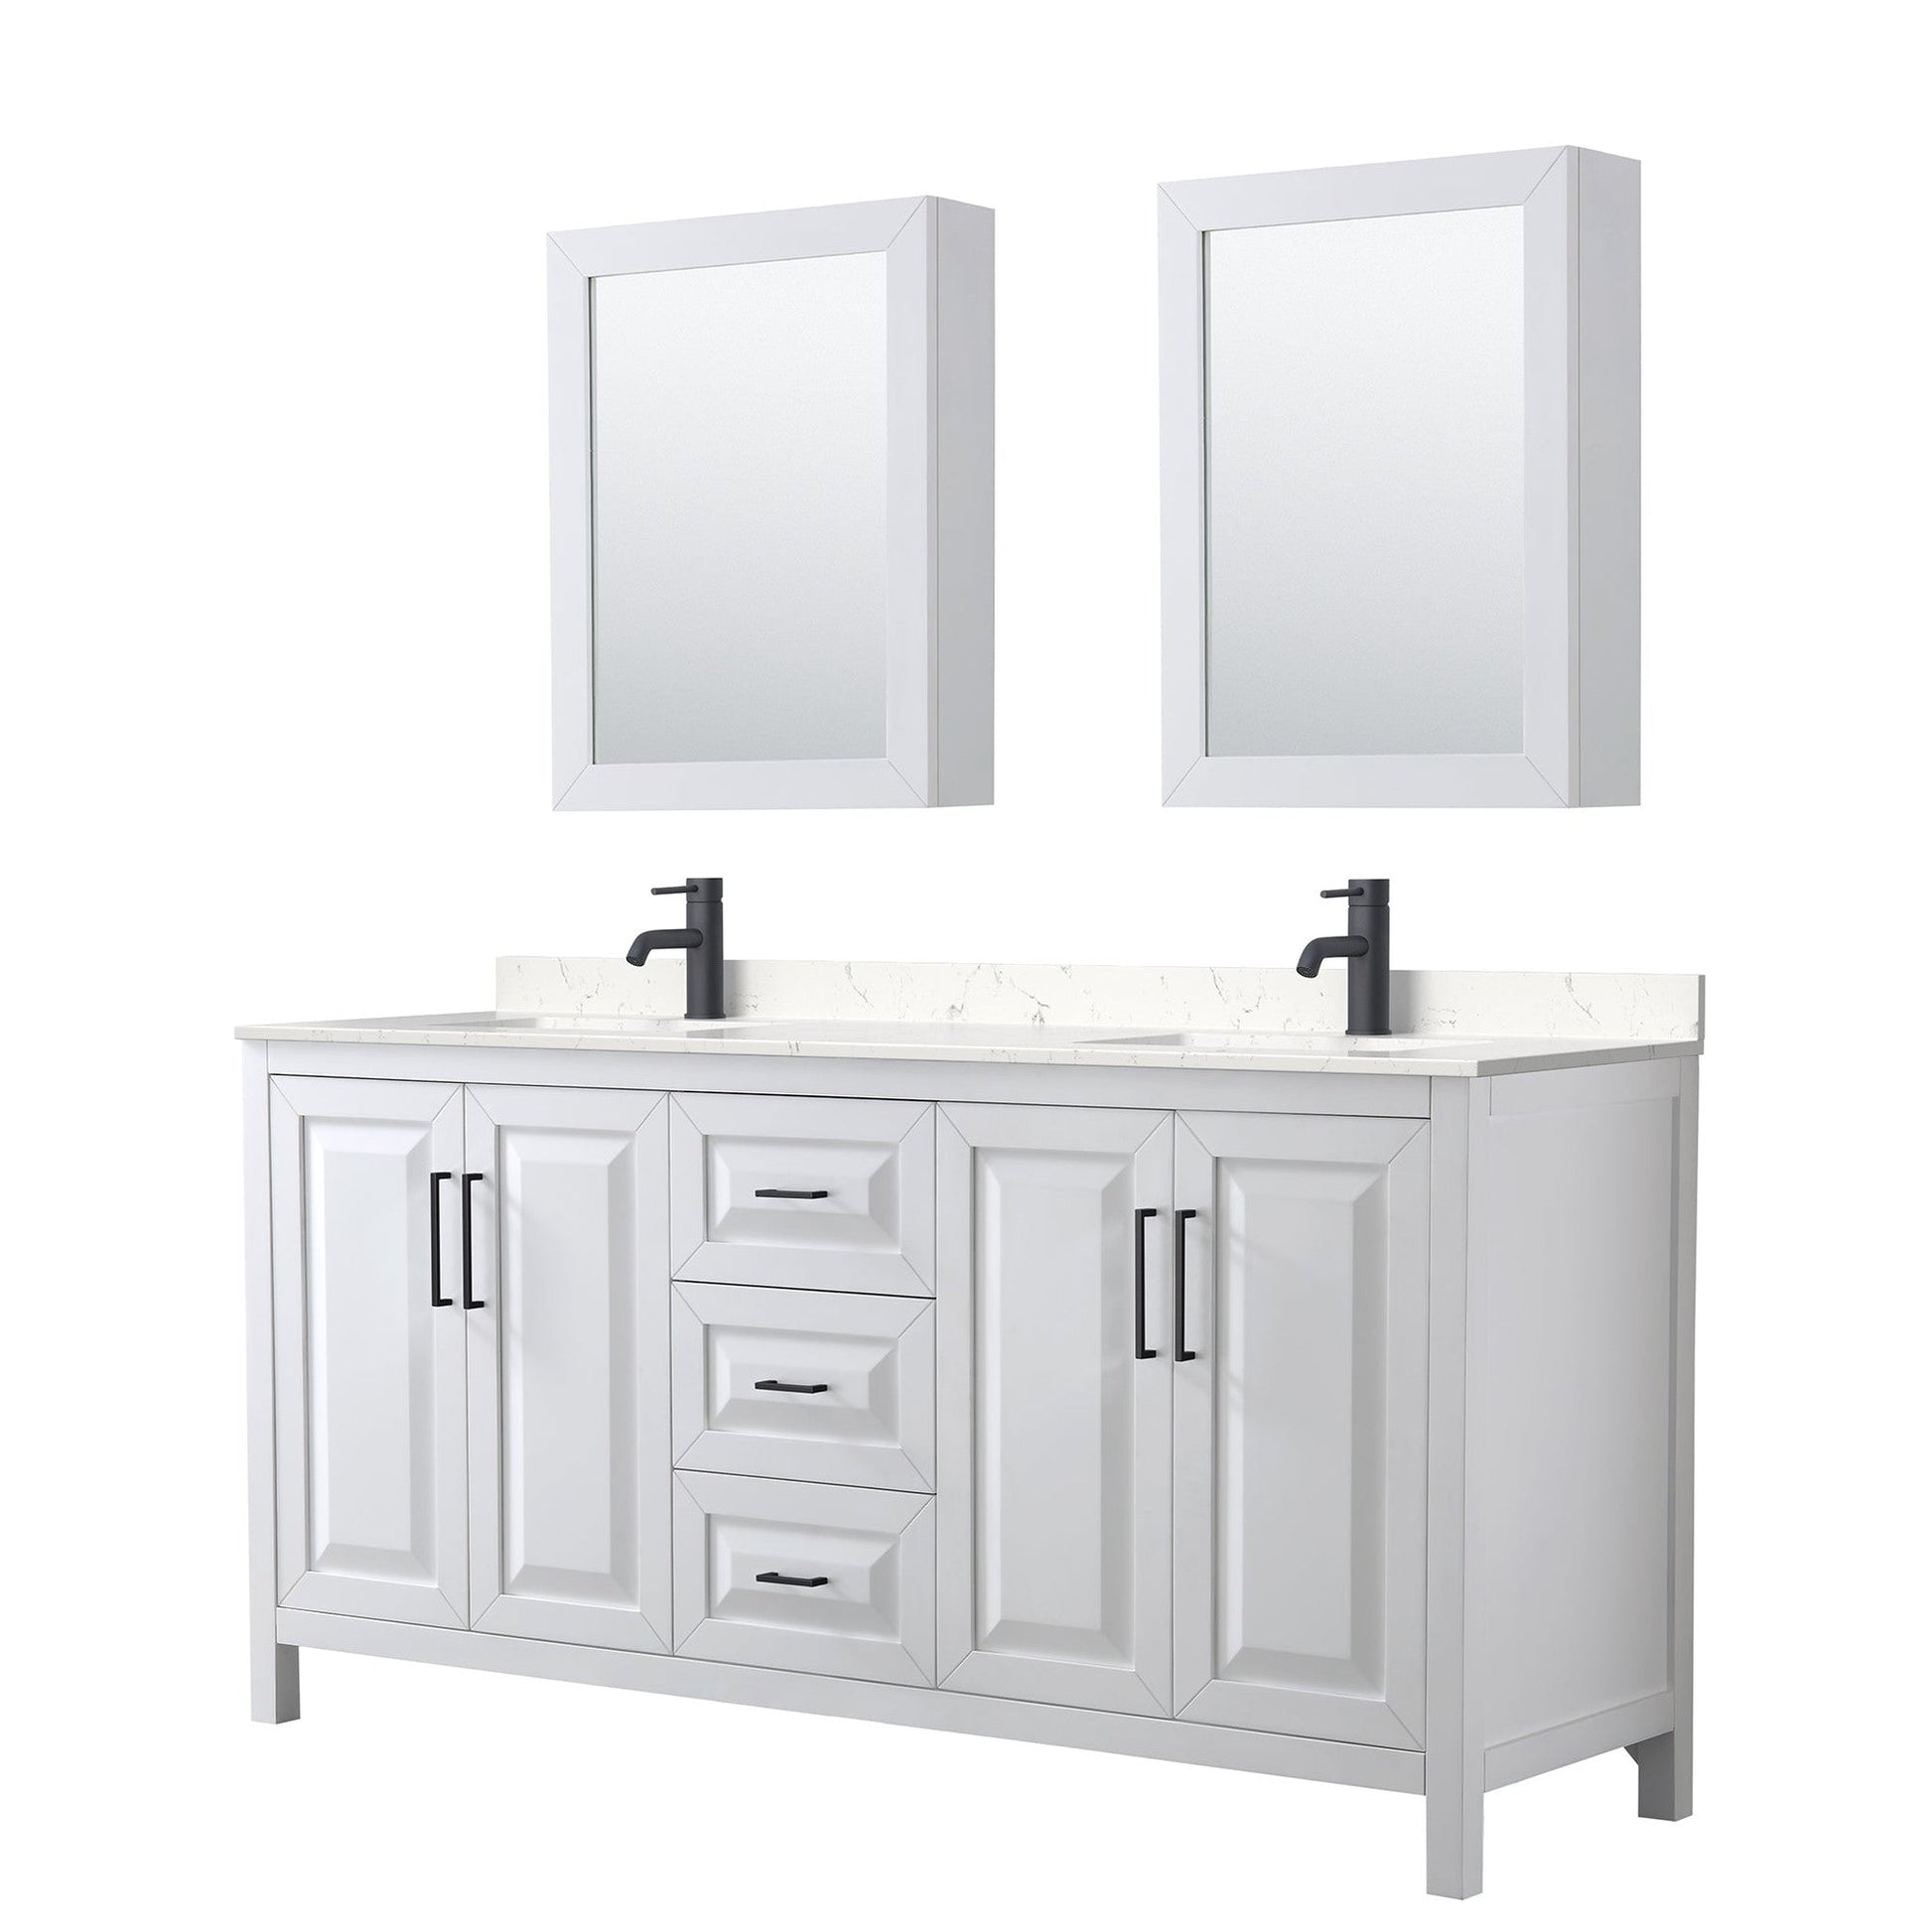 Daria 72" Double Bathroom Vanity in White, Carrara Cultured Marble Countertop, Undermount Square Sinks, Matte Black Trim, Medicine Cabinets